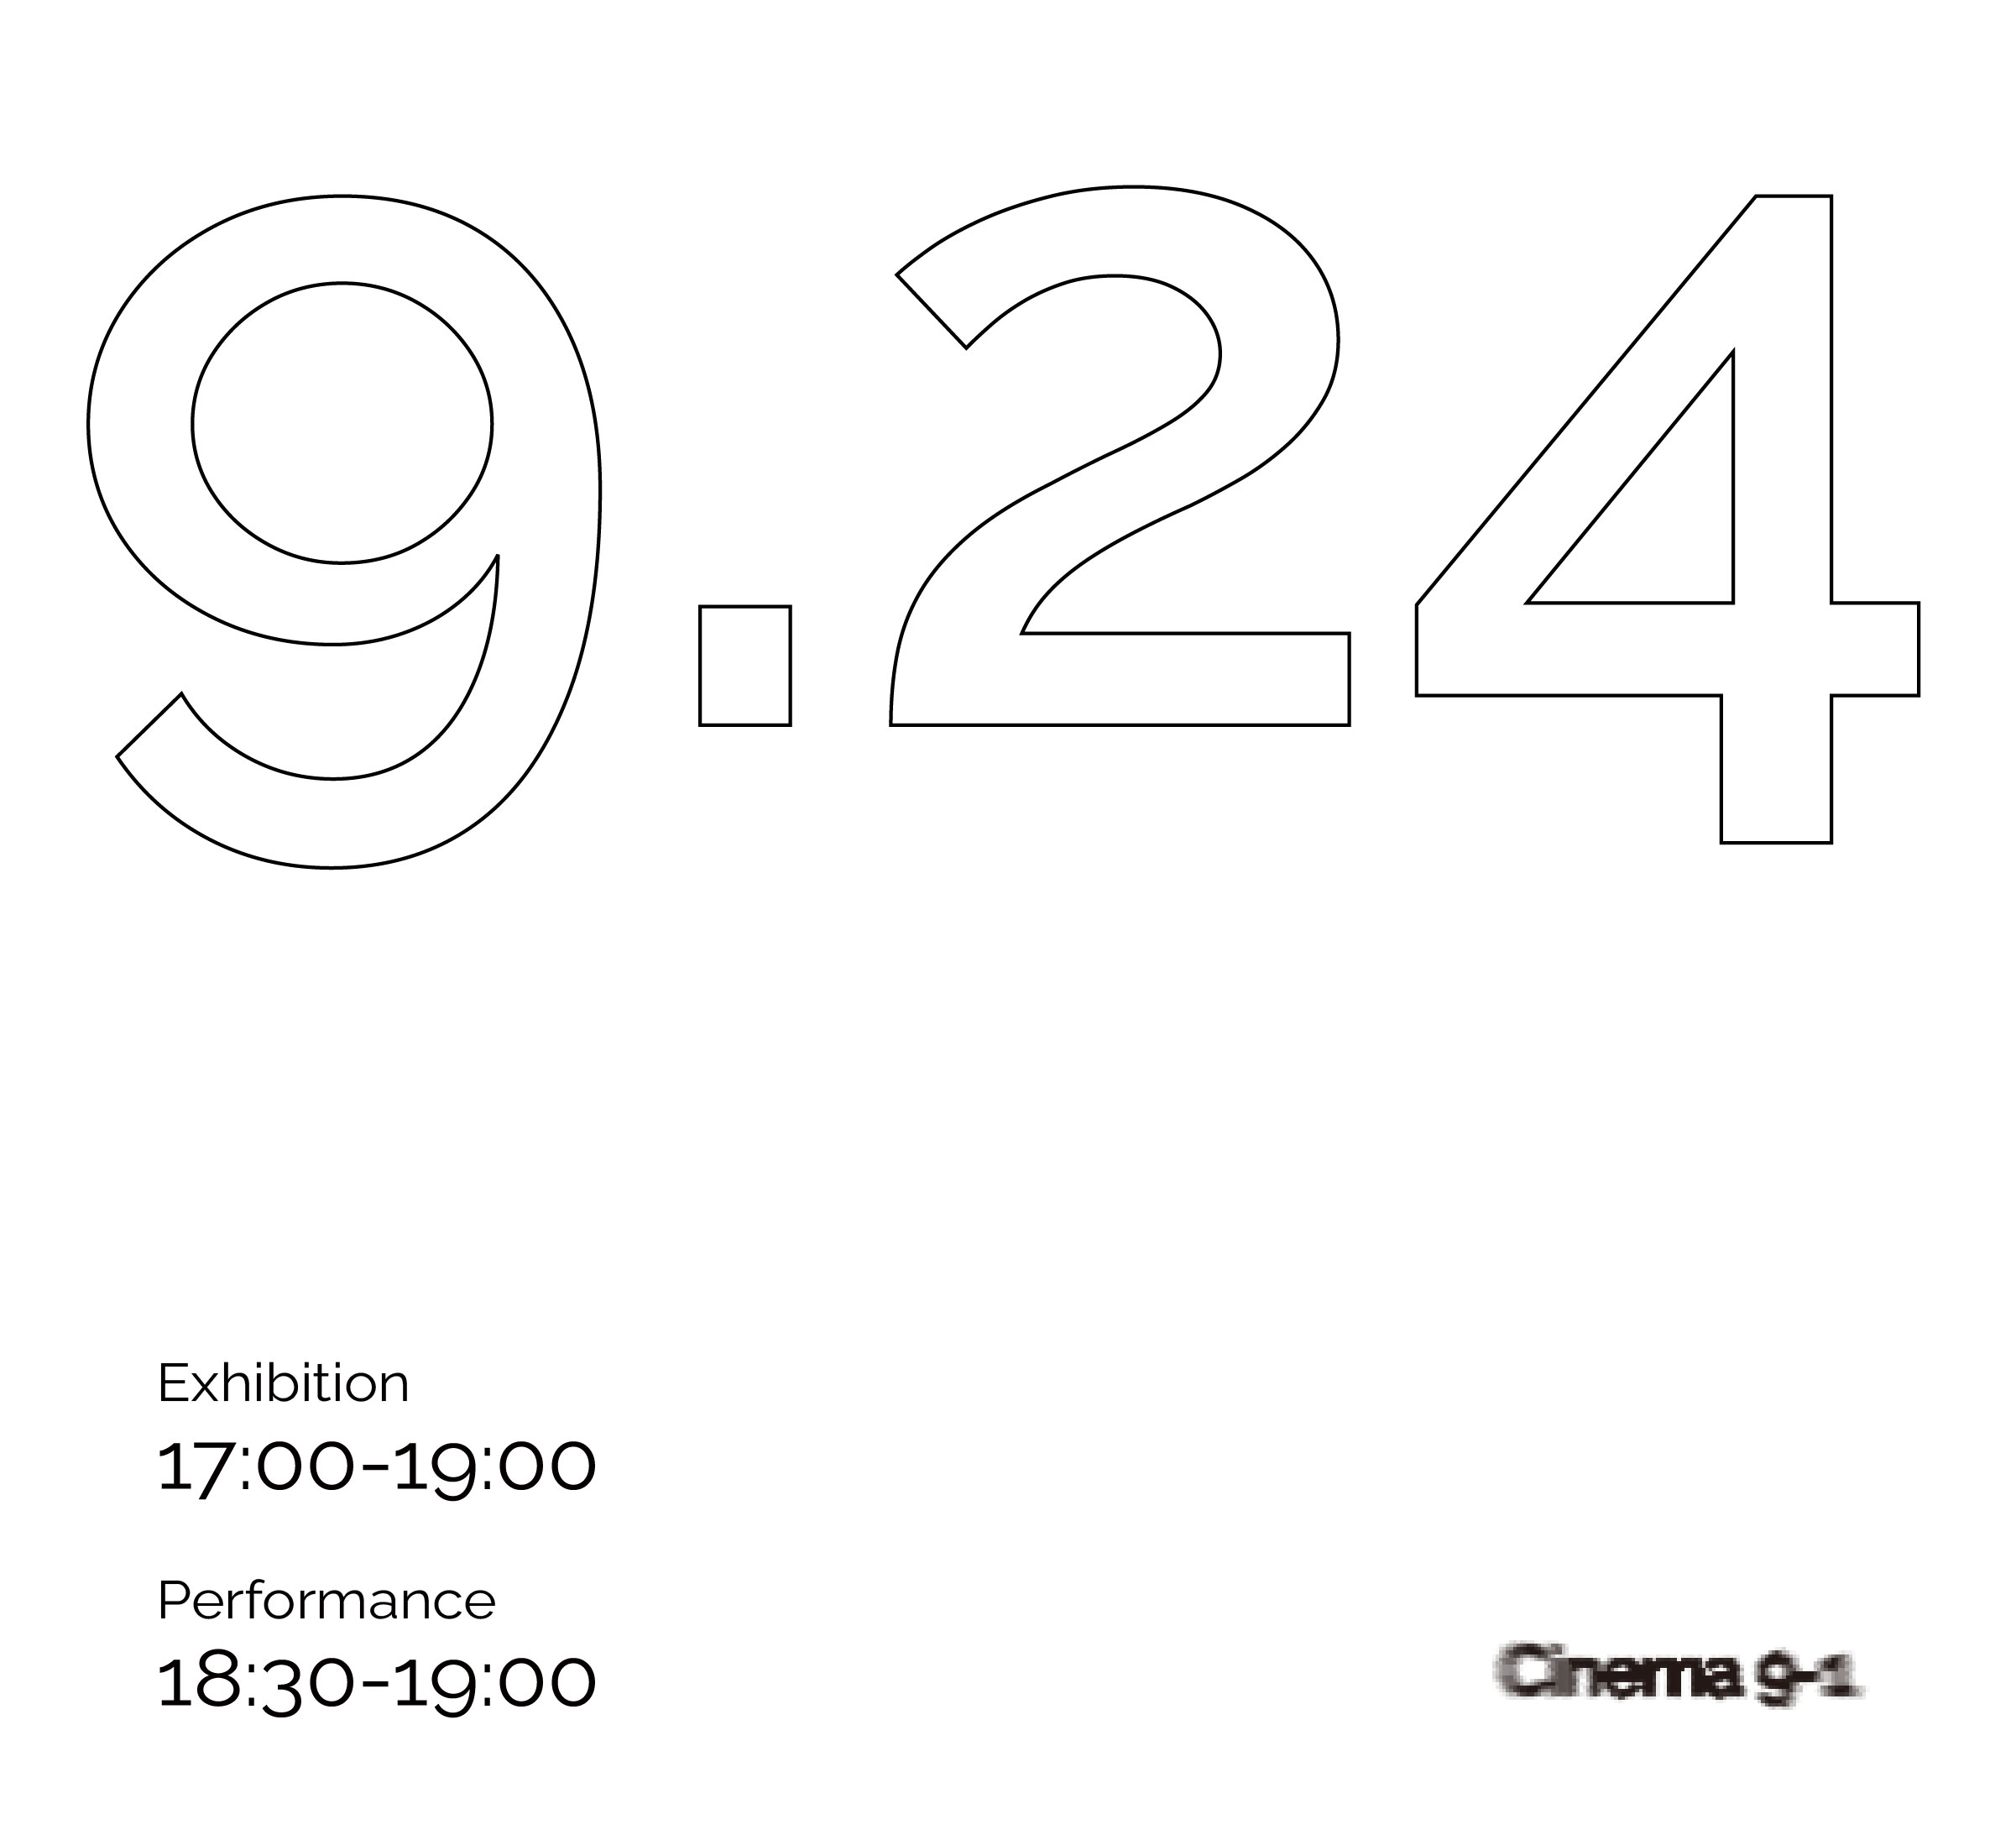 Exhibition 'Cinema 9-1' poster, DAY 3.